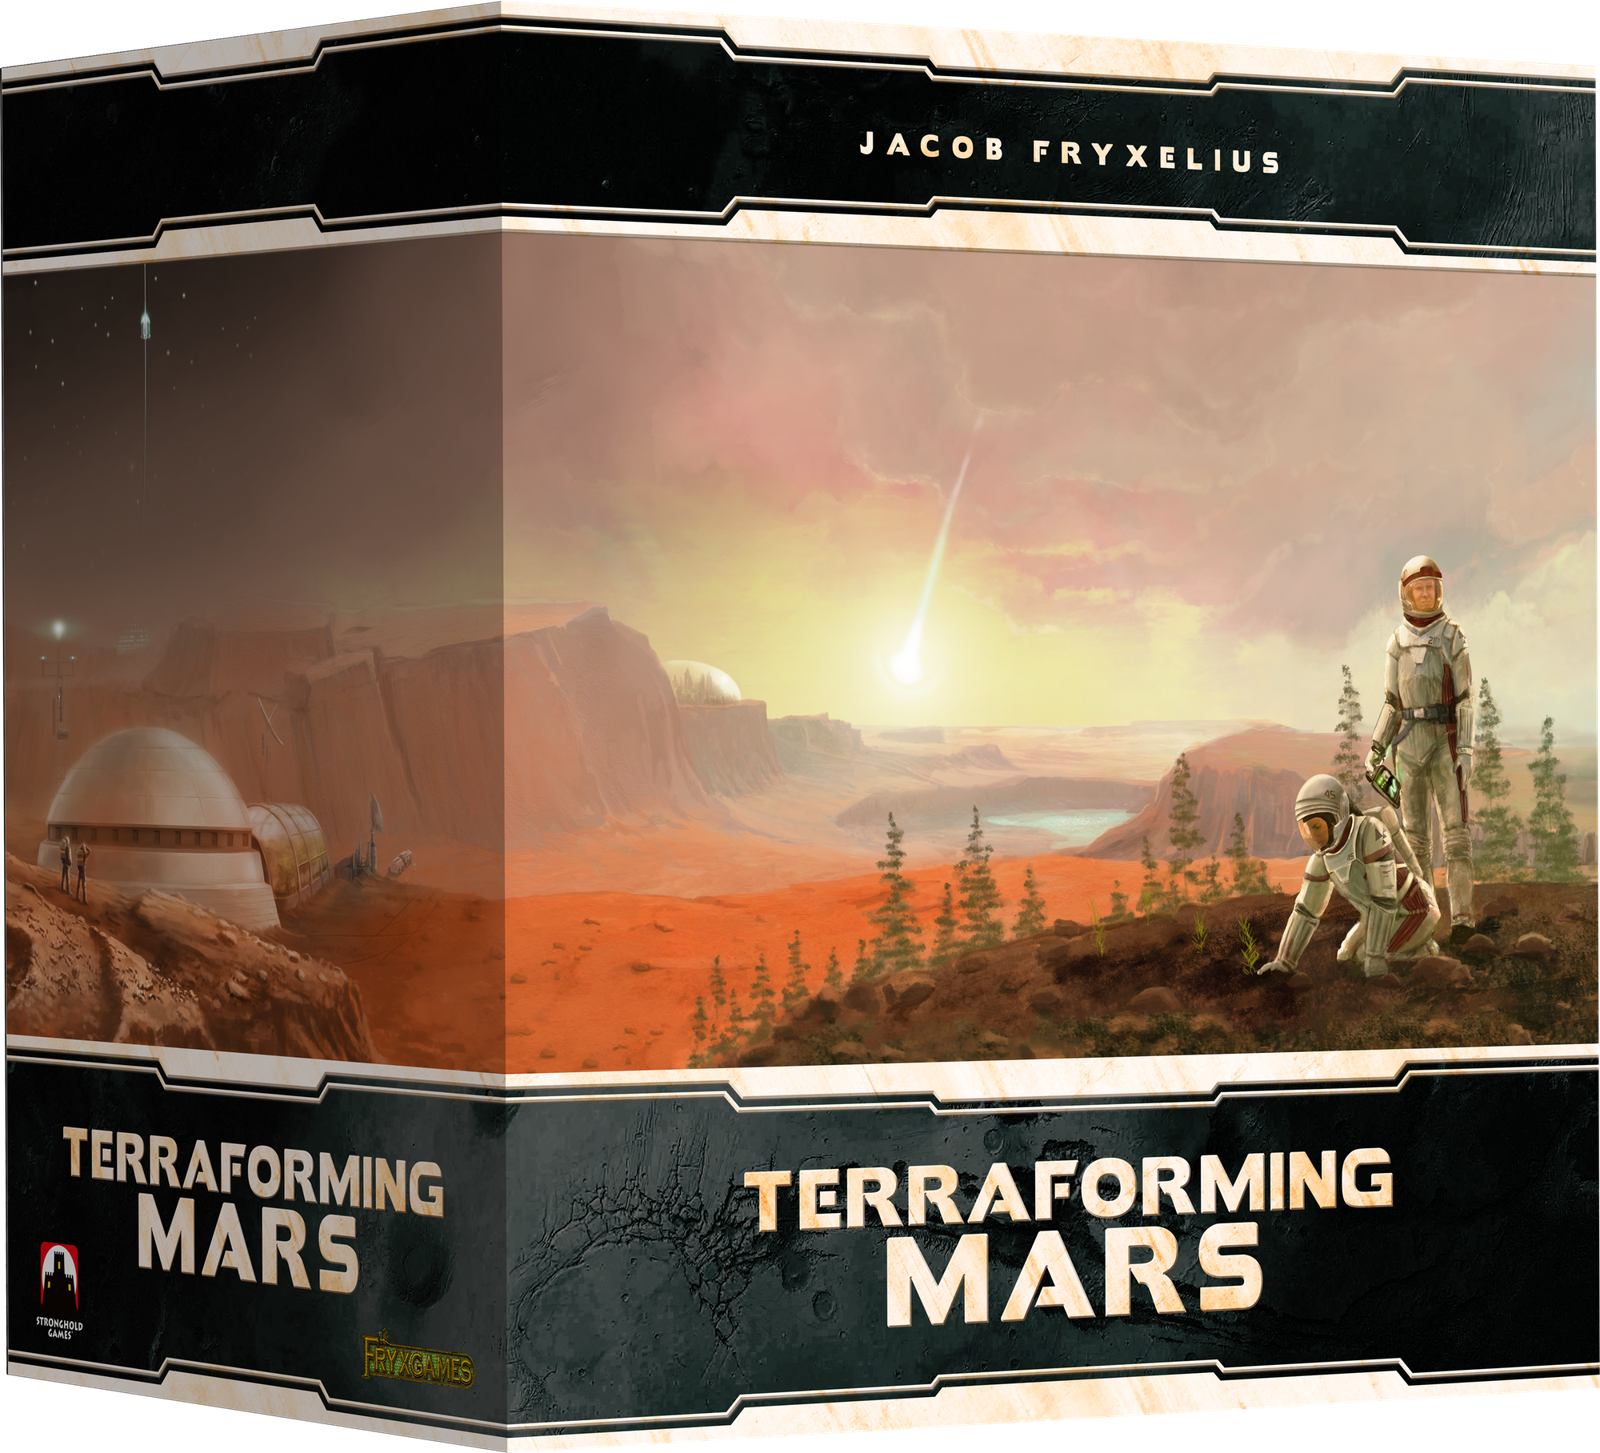 Terraformacja Marsa: Big Storage Box